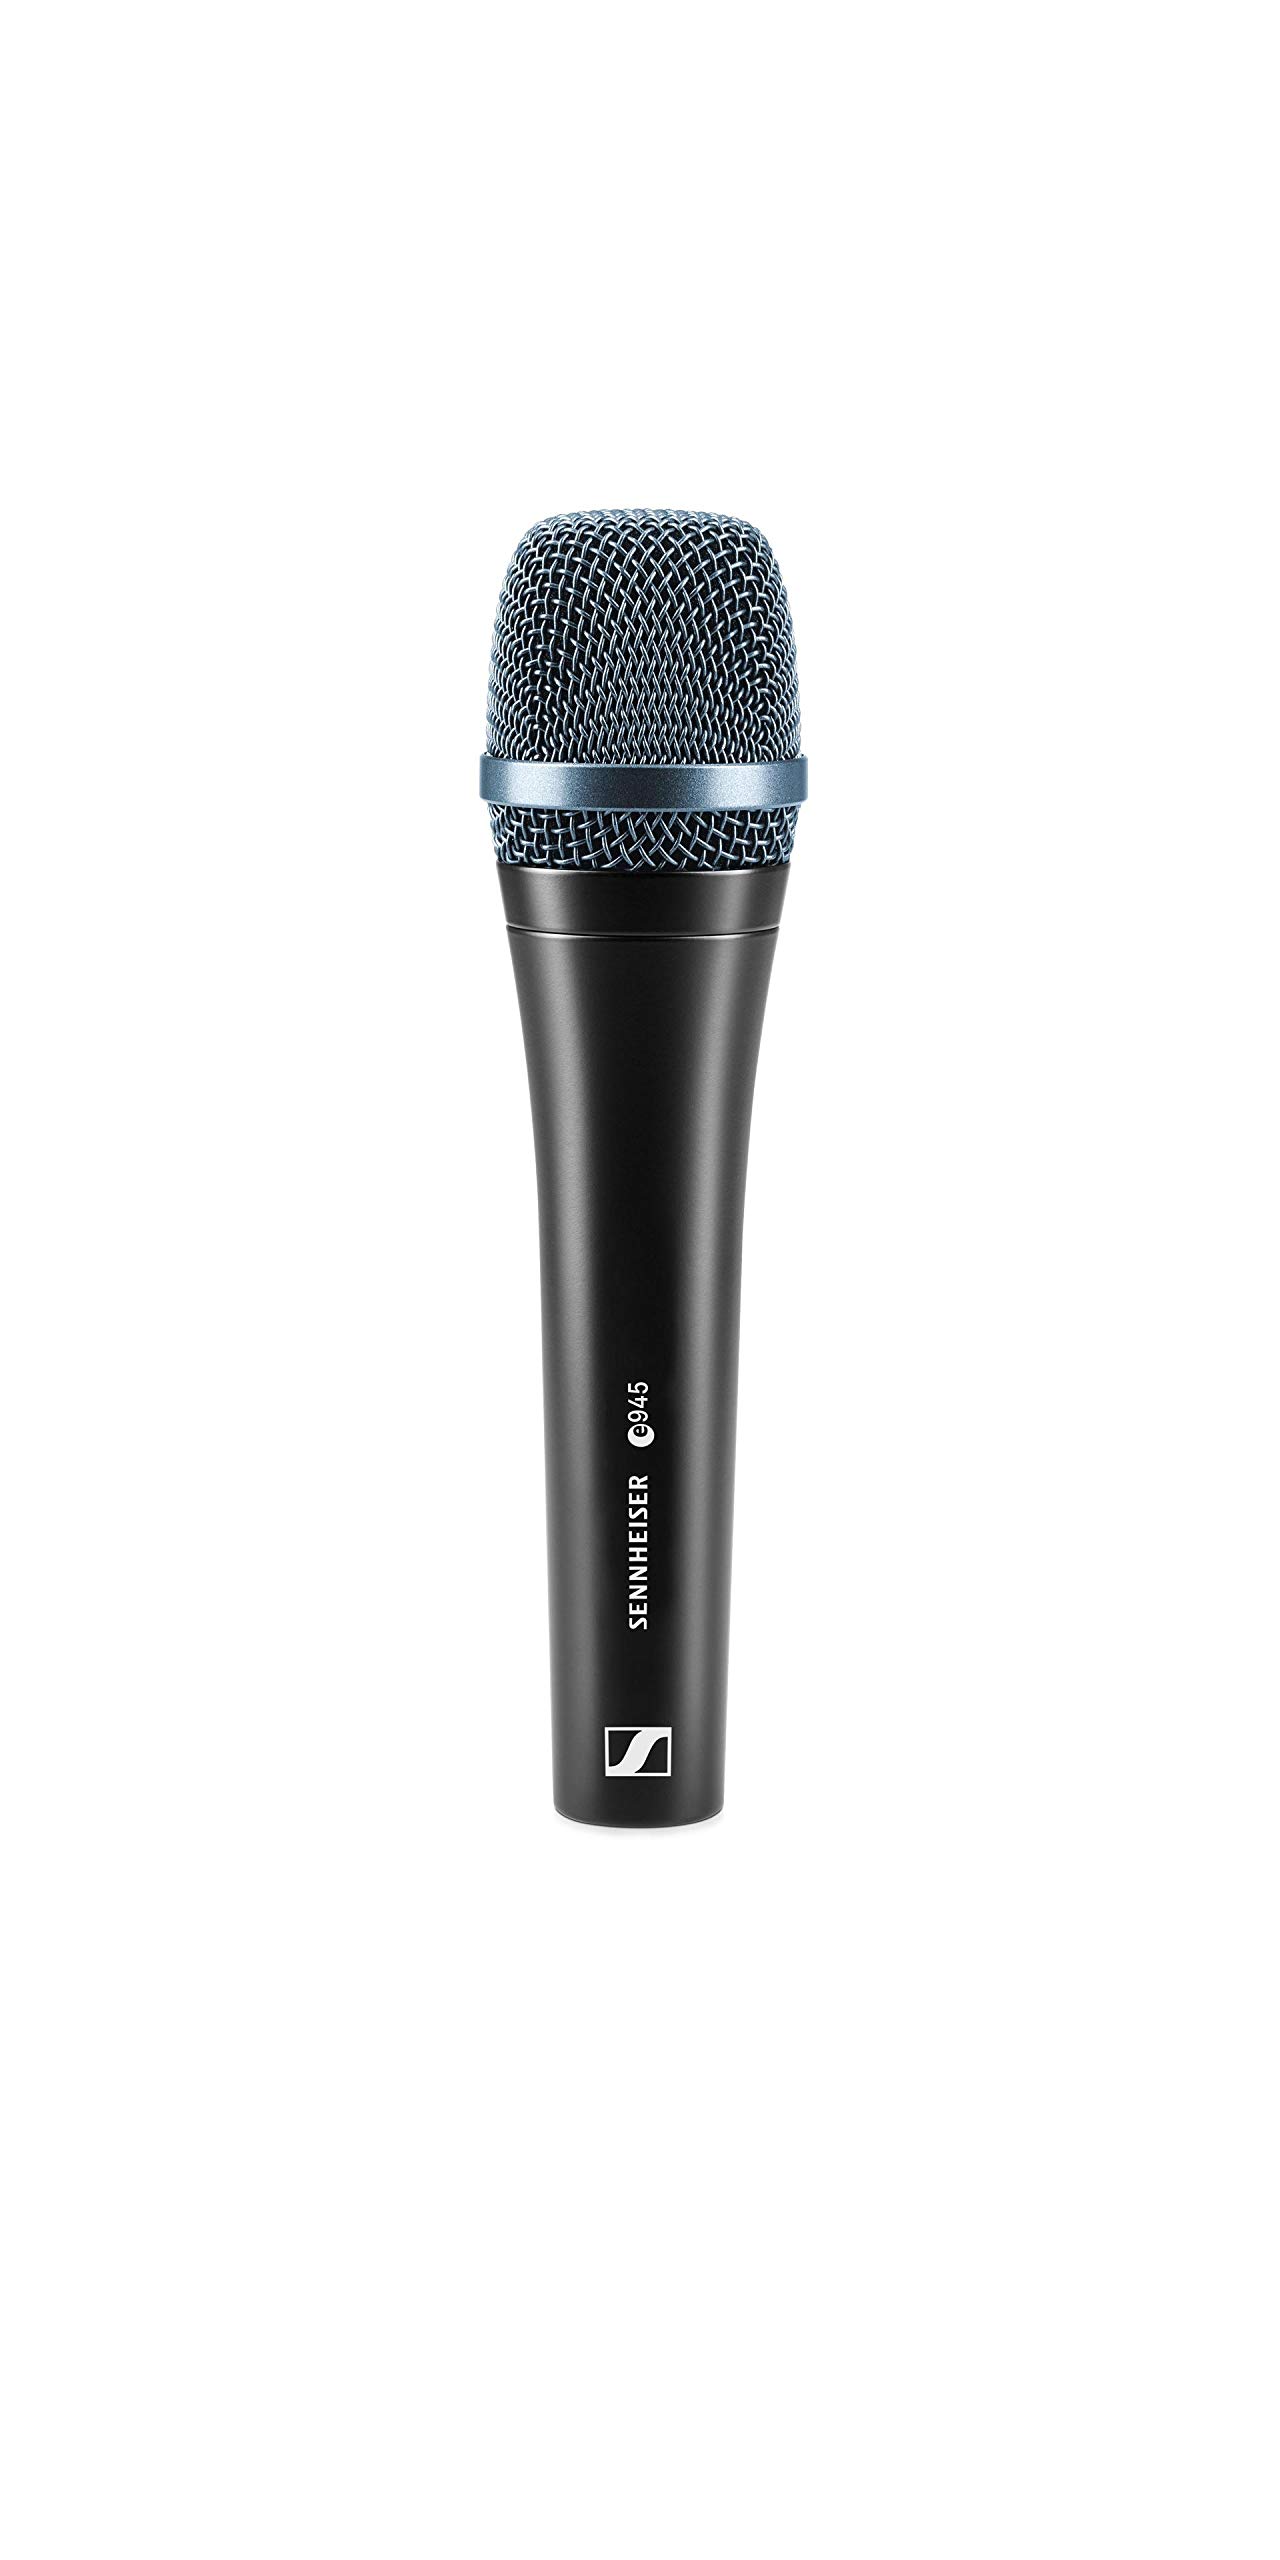 Sennheiser Pro Audio Professionelles dynamisches Supernieren-Gesangsmikrofon E 945